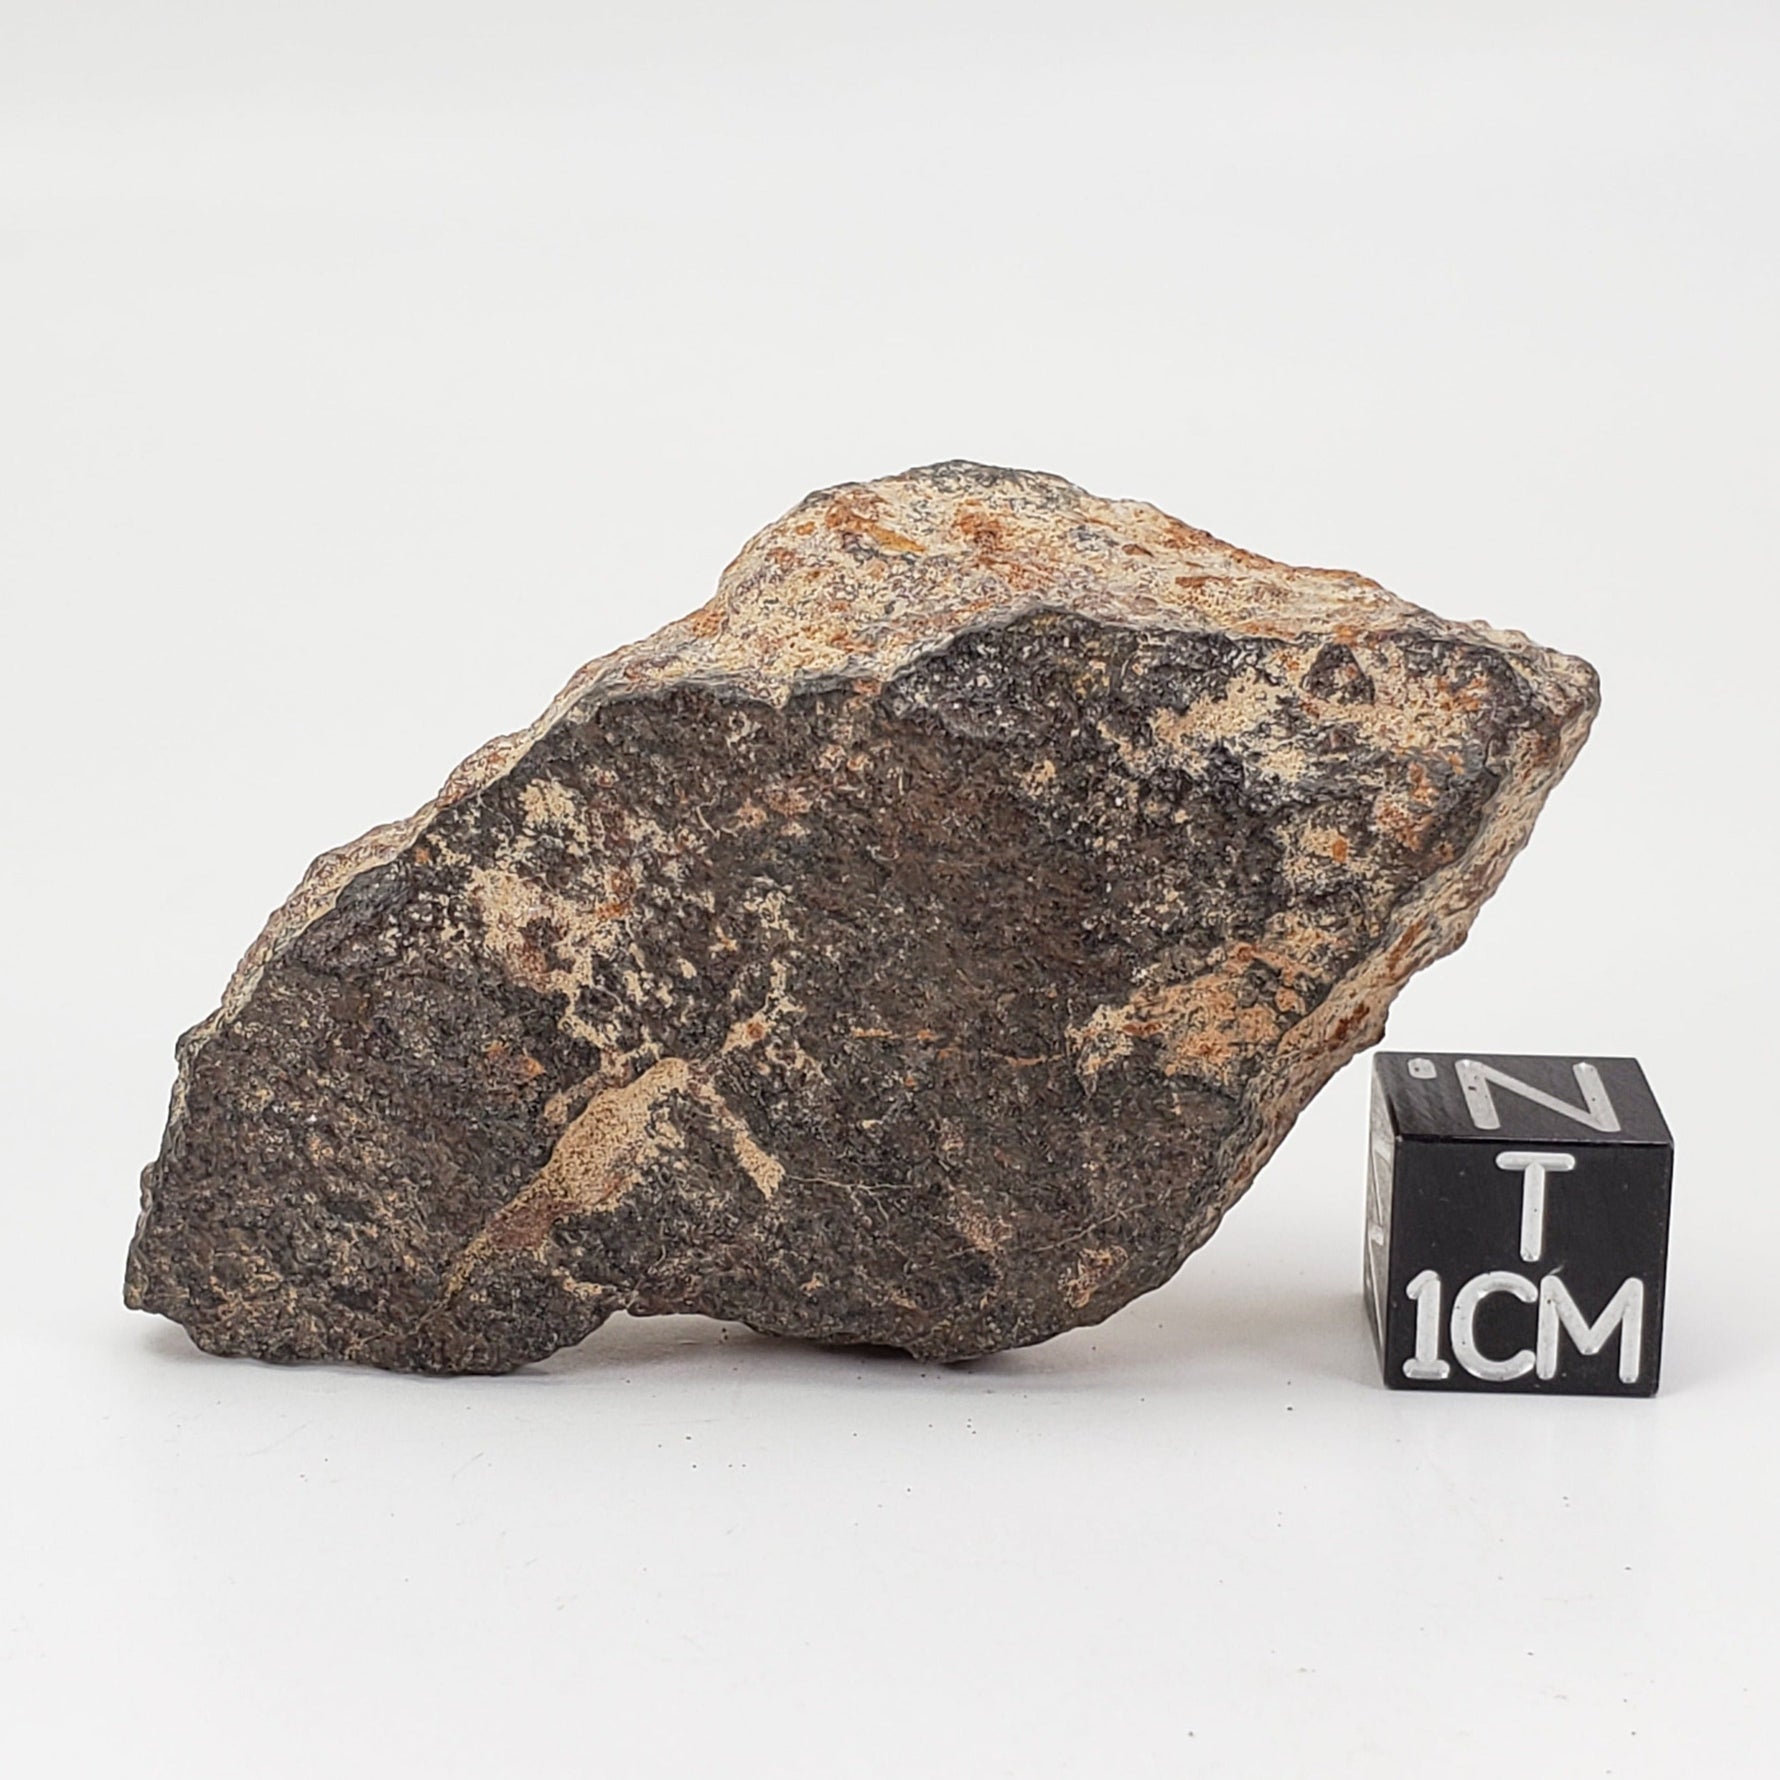 Ghubara Meteorite | 43 Gr | Individual | Rare Stony Black L5 Chondrite